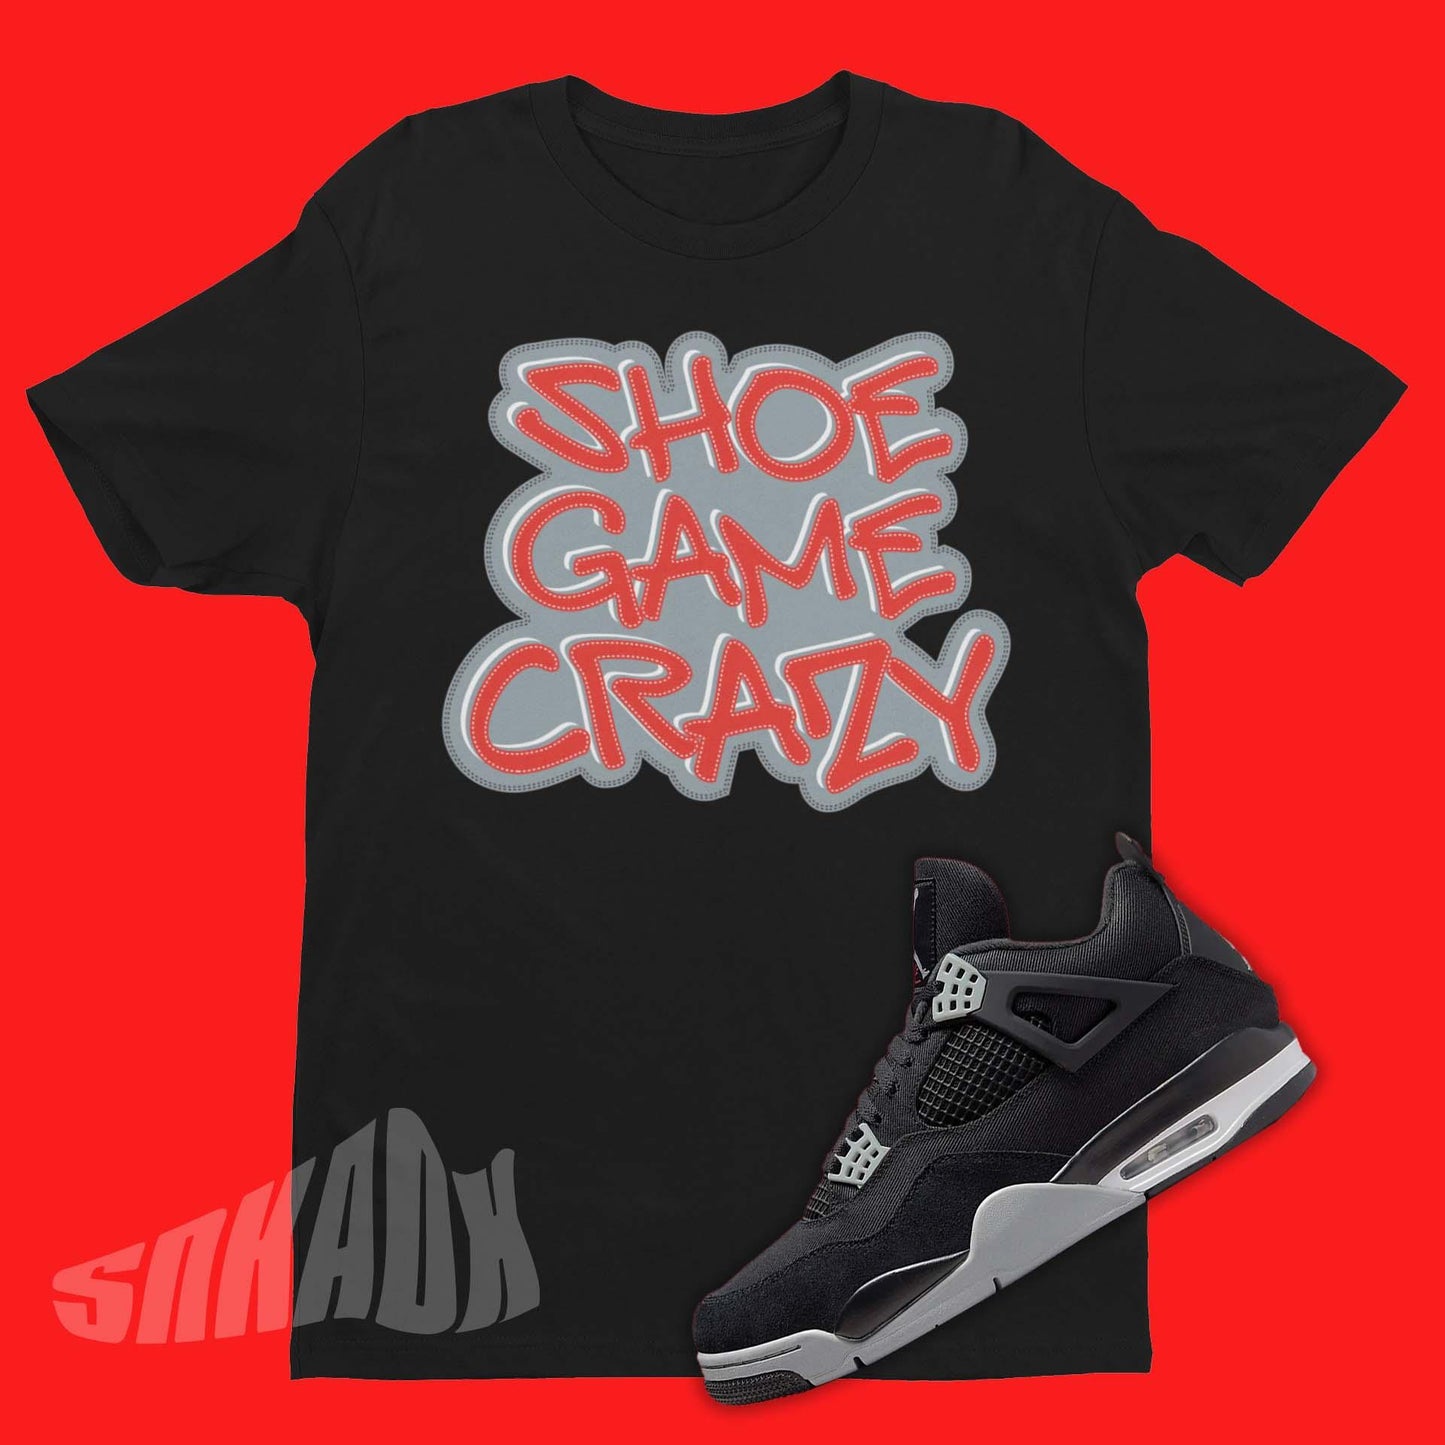 Shoe Game Crazy Shirt To Match Air Jordan 4 Black Canvas